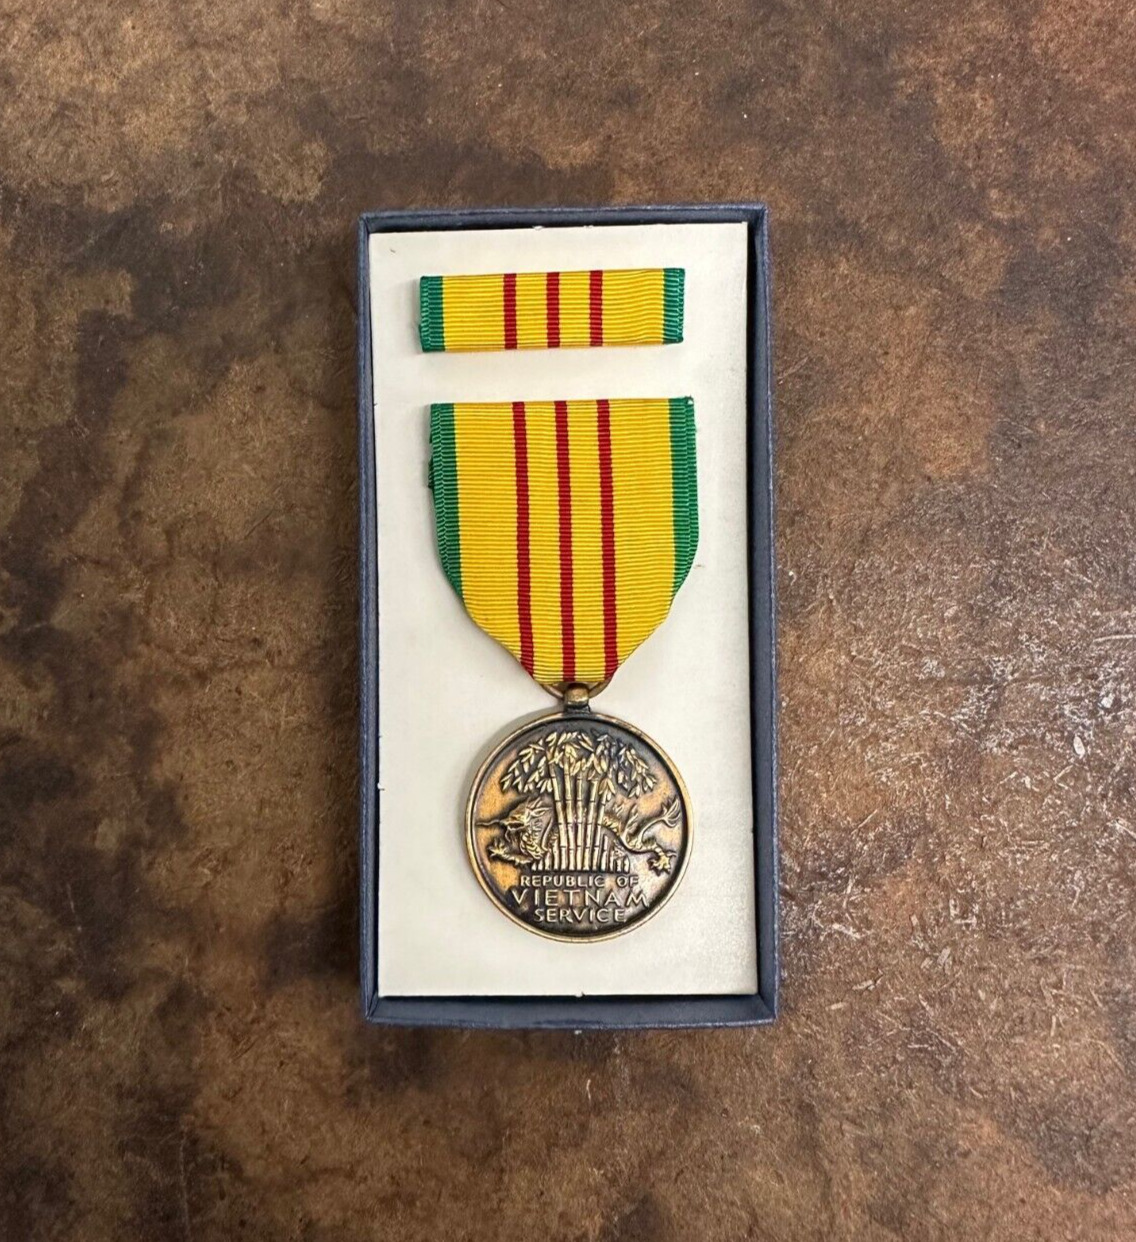 NOS Vietnam War Era US Military Vietnam Service Medal 8455-926-1664, 1969, R-47